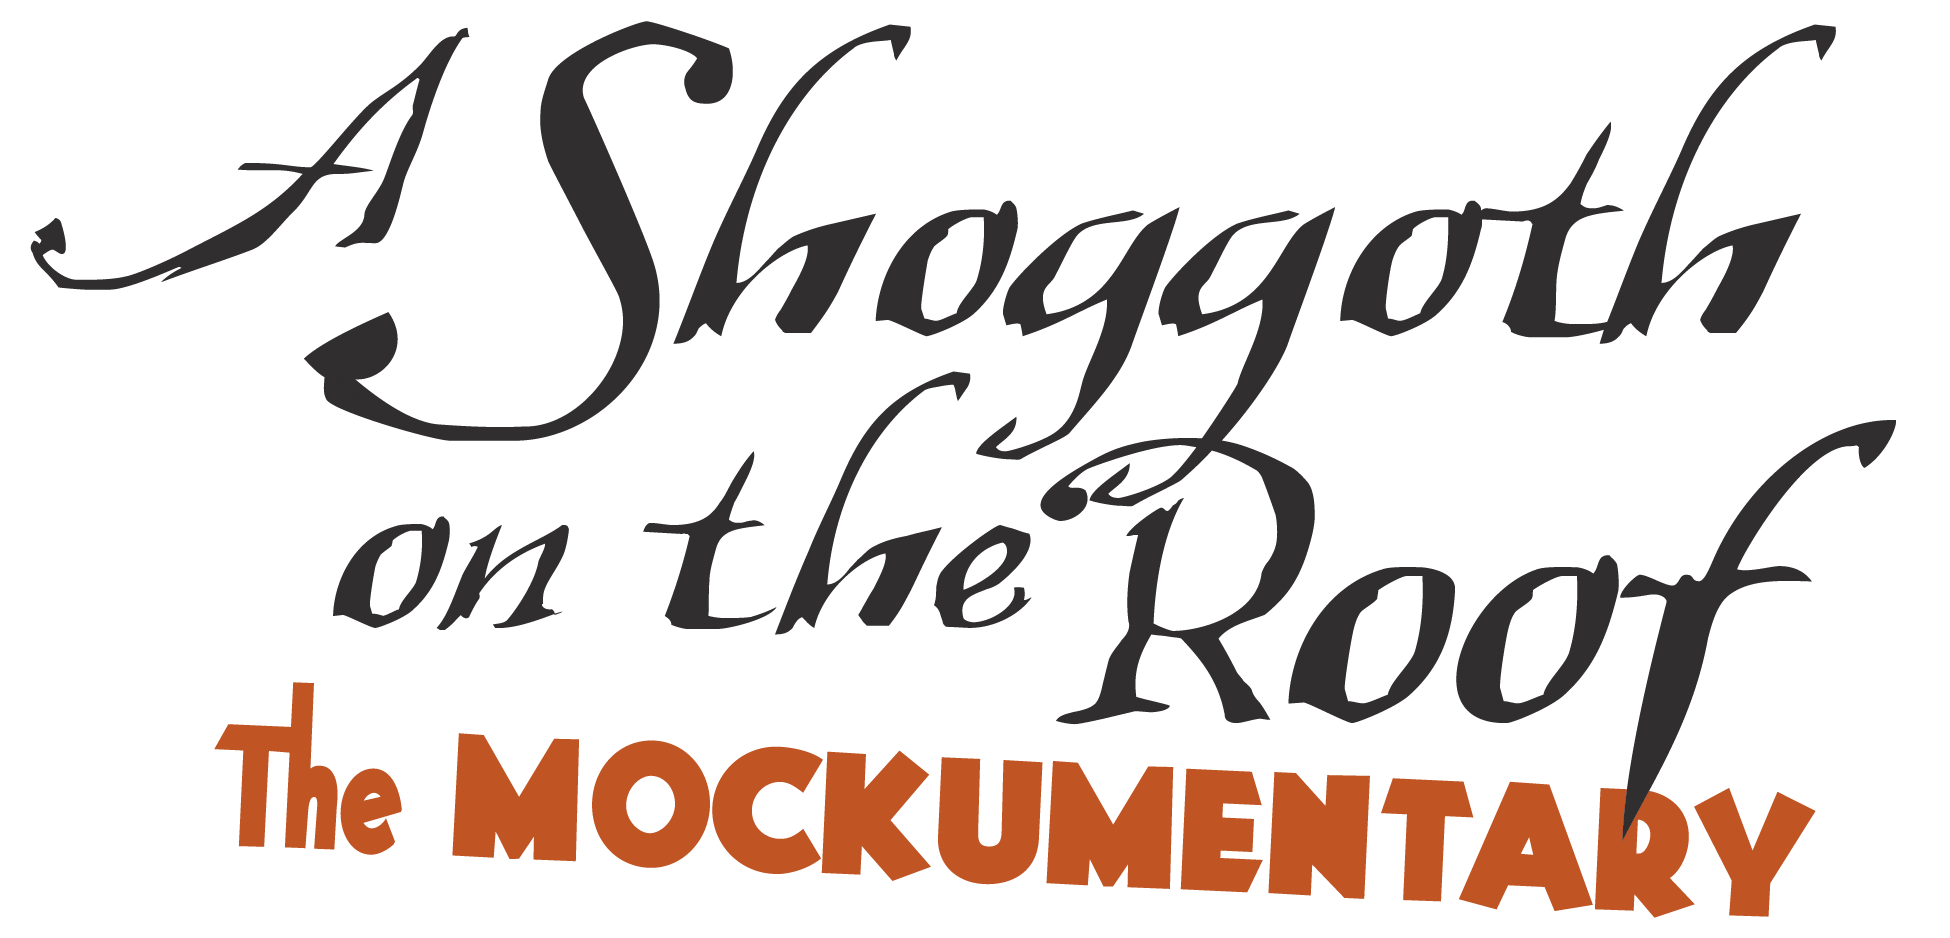 A Shoggoth on the Roof logo